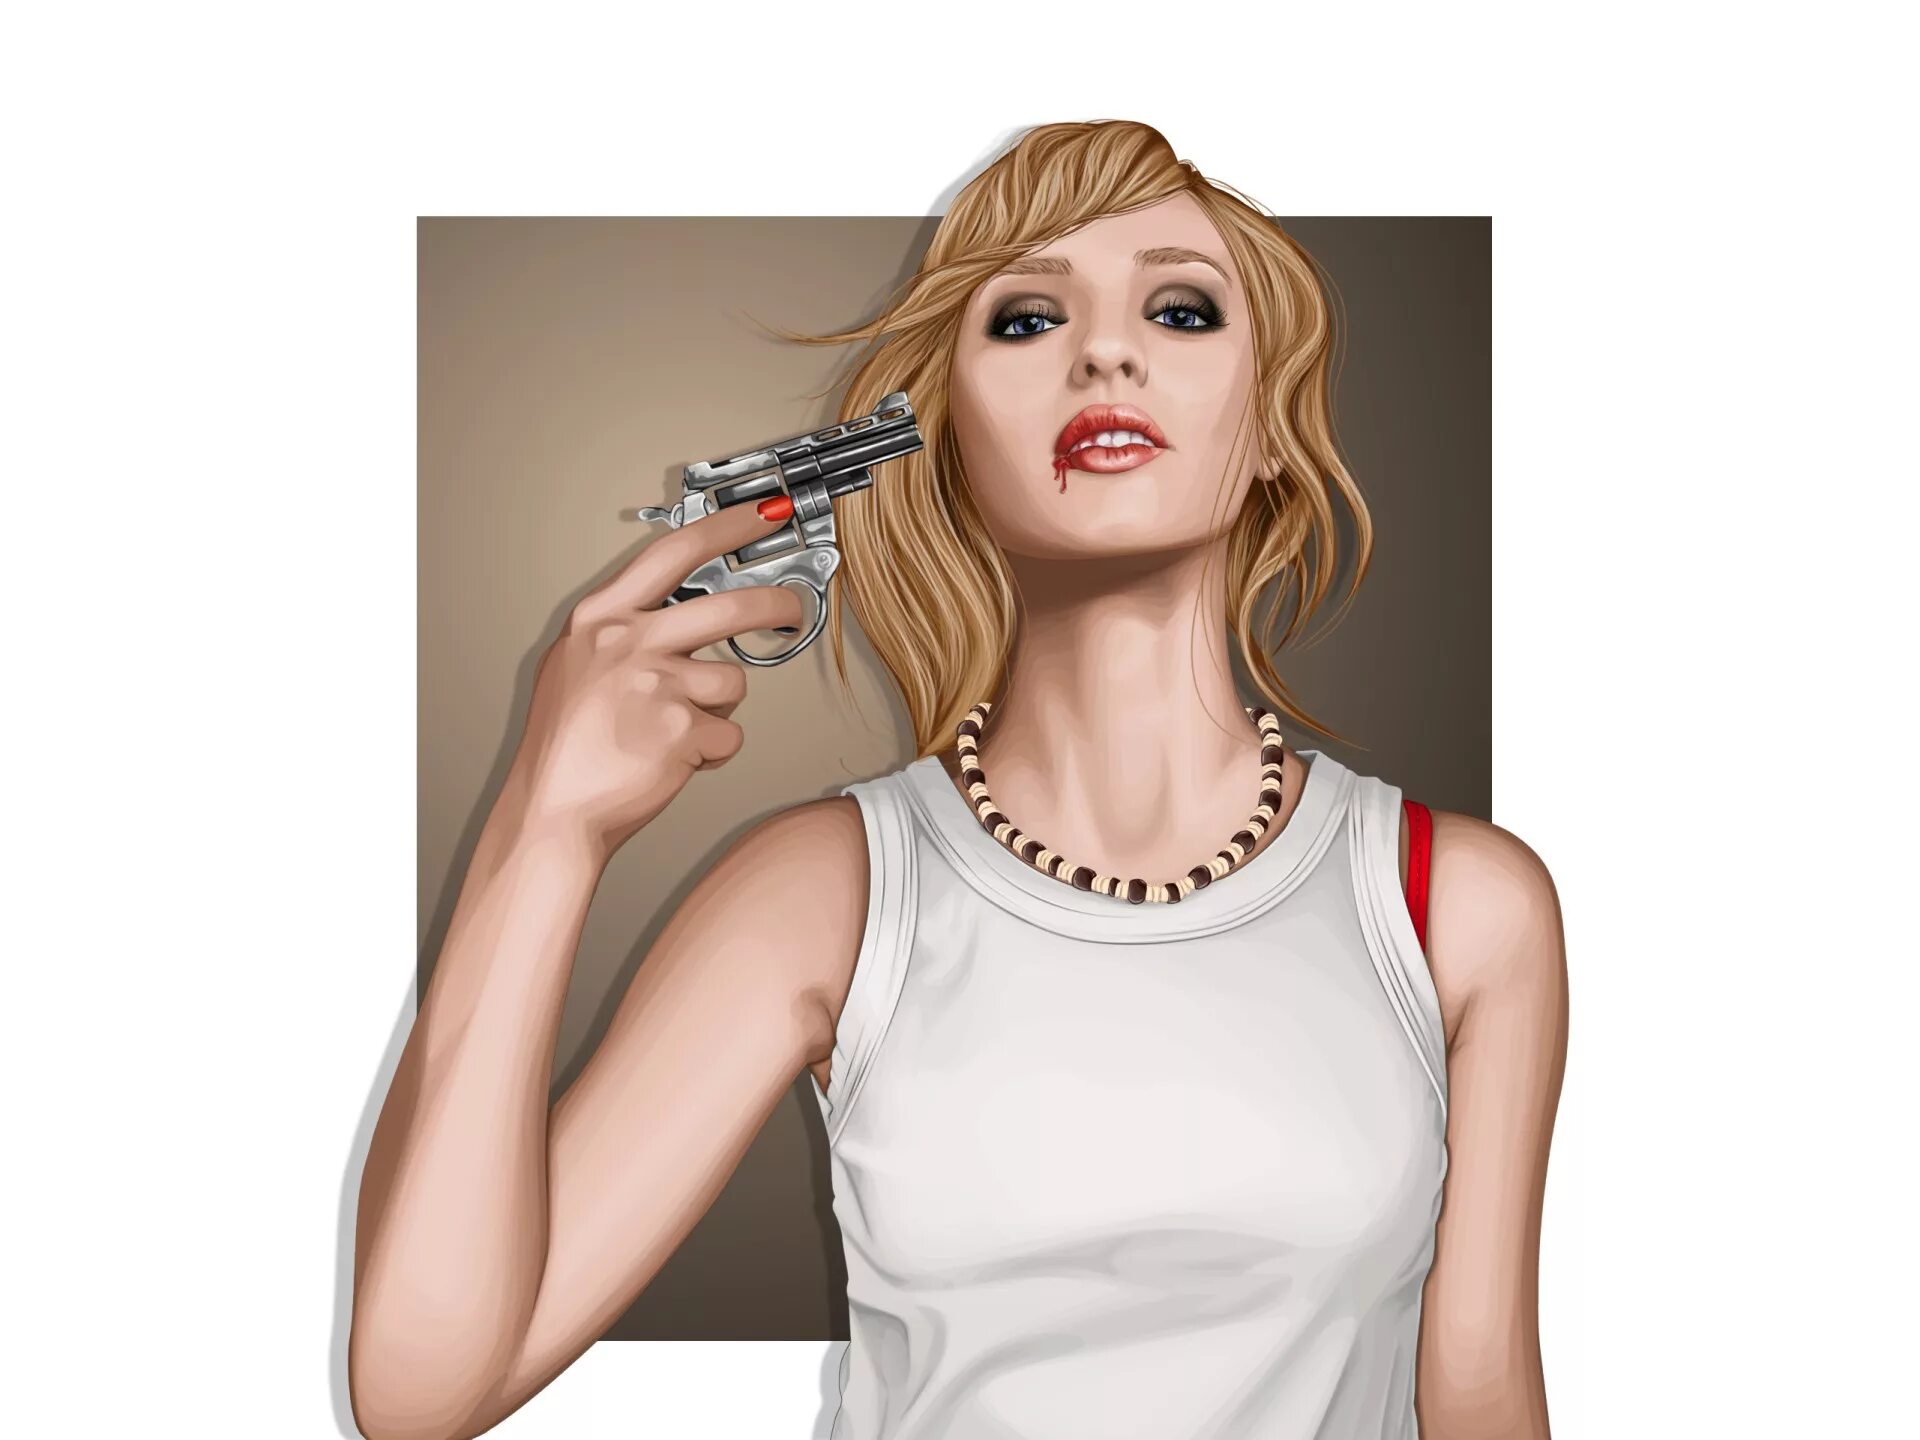 Suicide blonde. Девушка с пистолетом у Виска. Два пальца к виску. Футболка женщина с пистолетом.